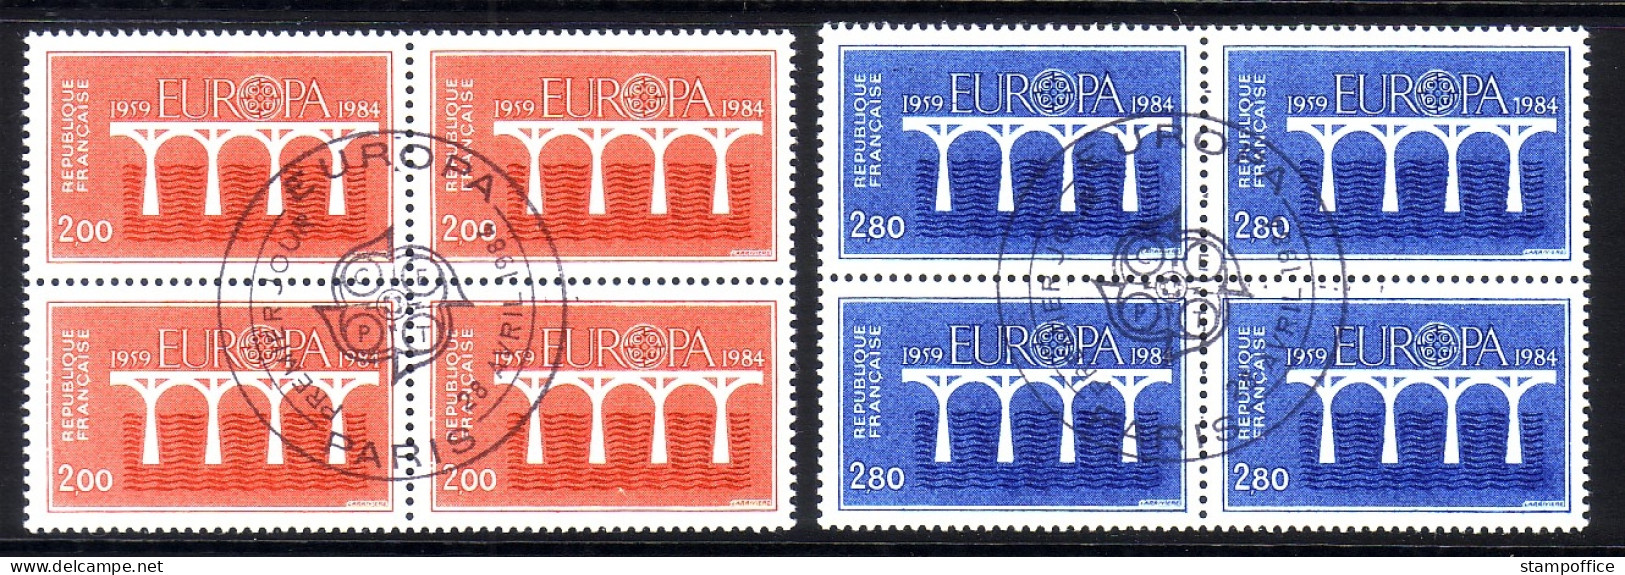 FRANKREICH MI-NR. 2441-2442 GESTEMPELT(USED) 4er BLOCK EUROPA 1984 - BRÜCKE - 1984